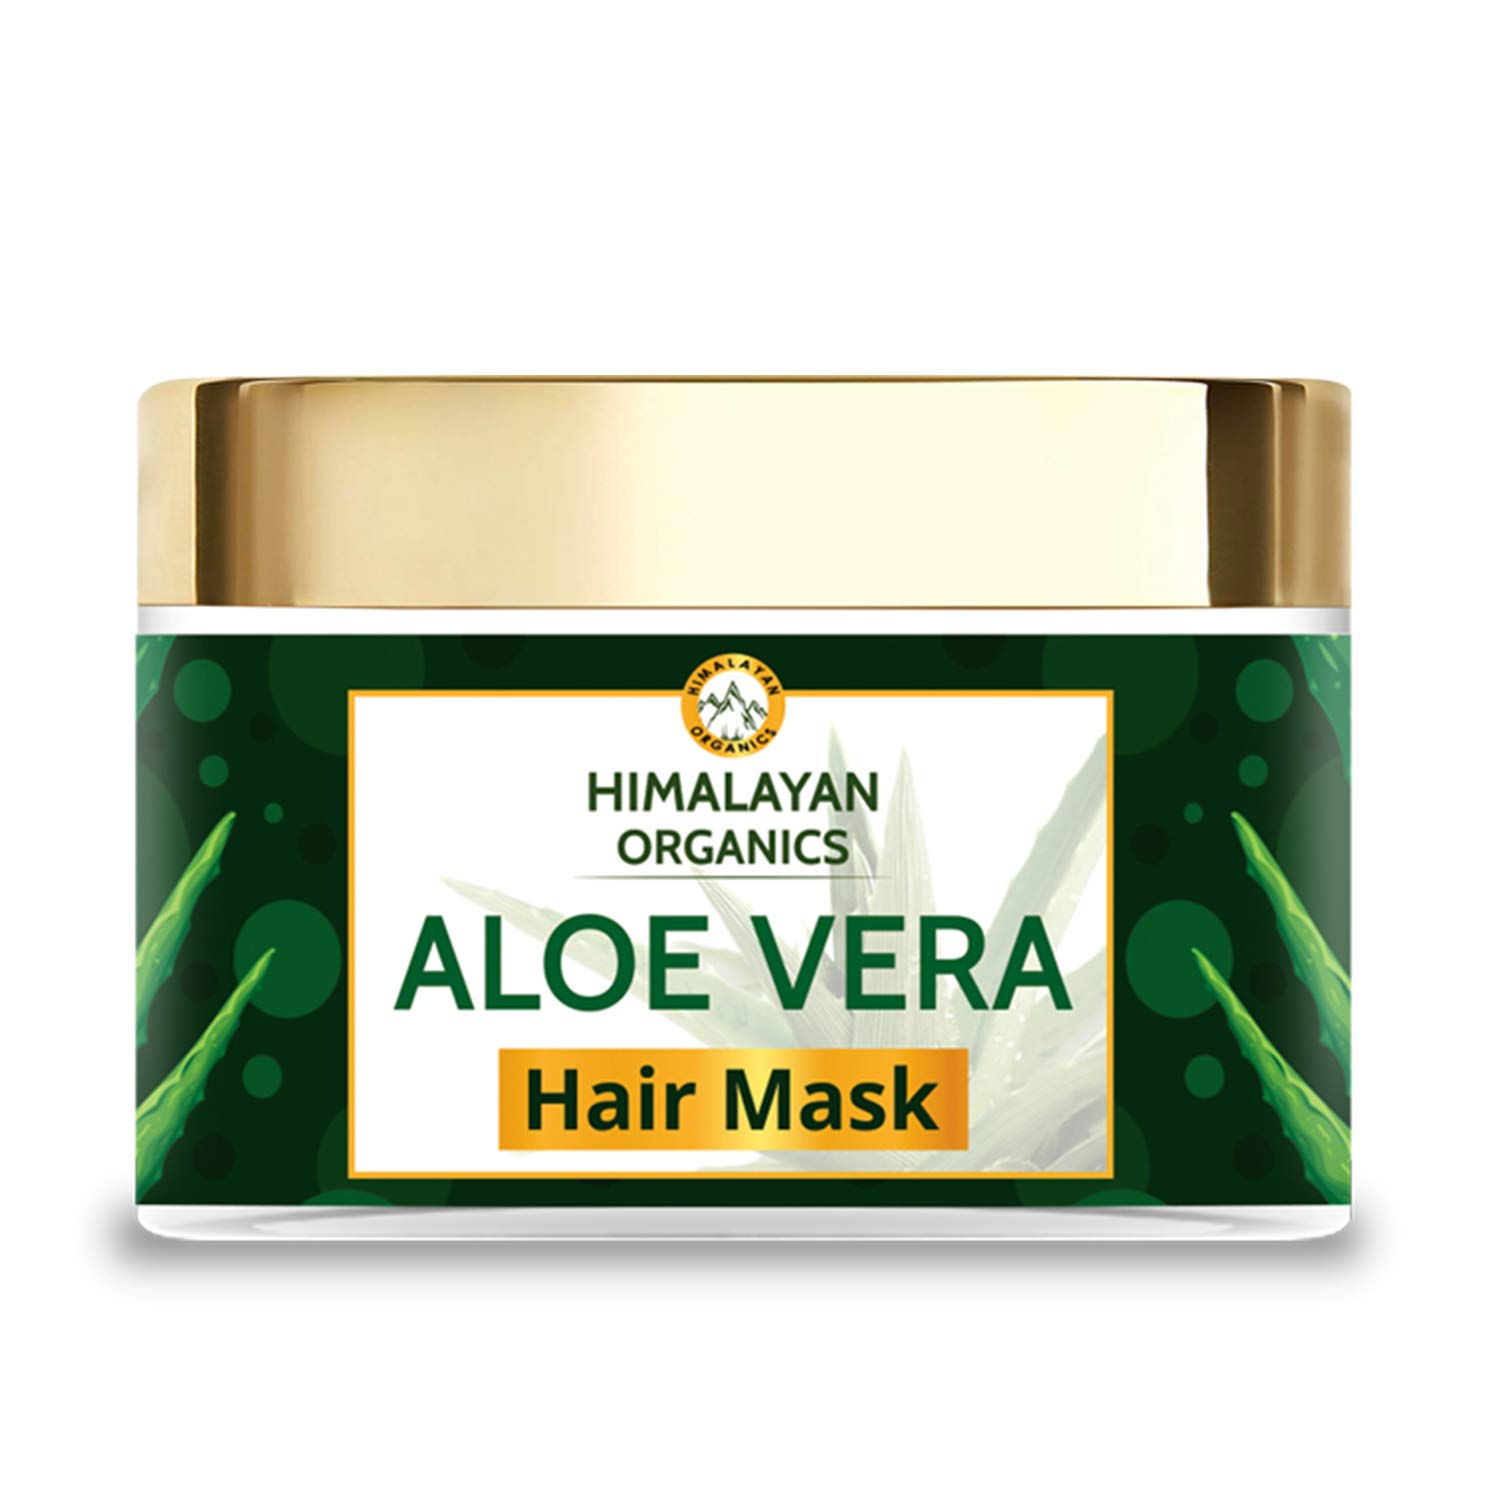 Himalayan Organics Aloevera Hair Mask